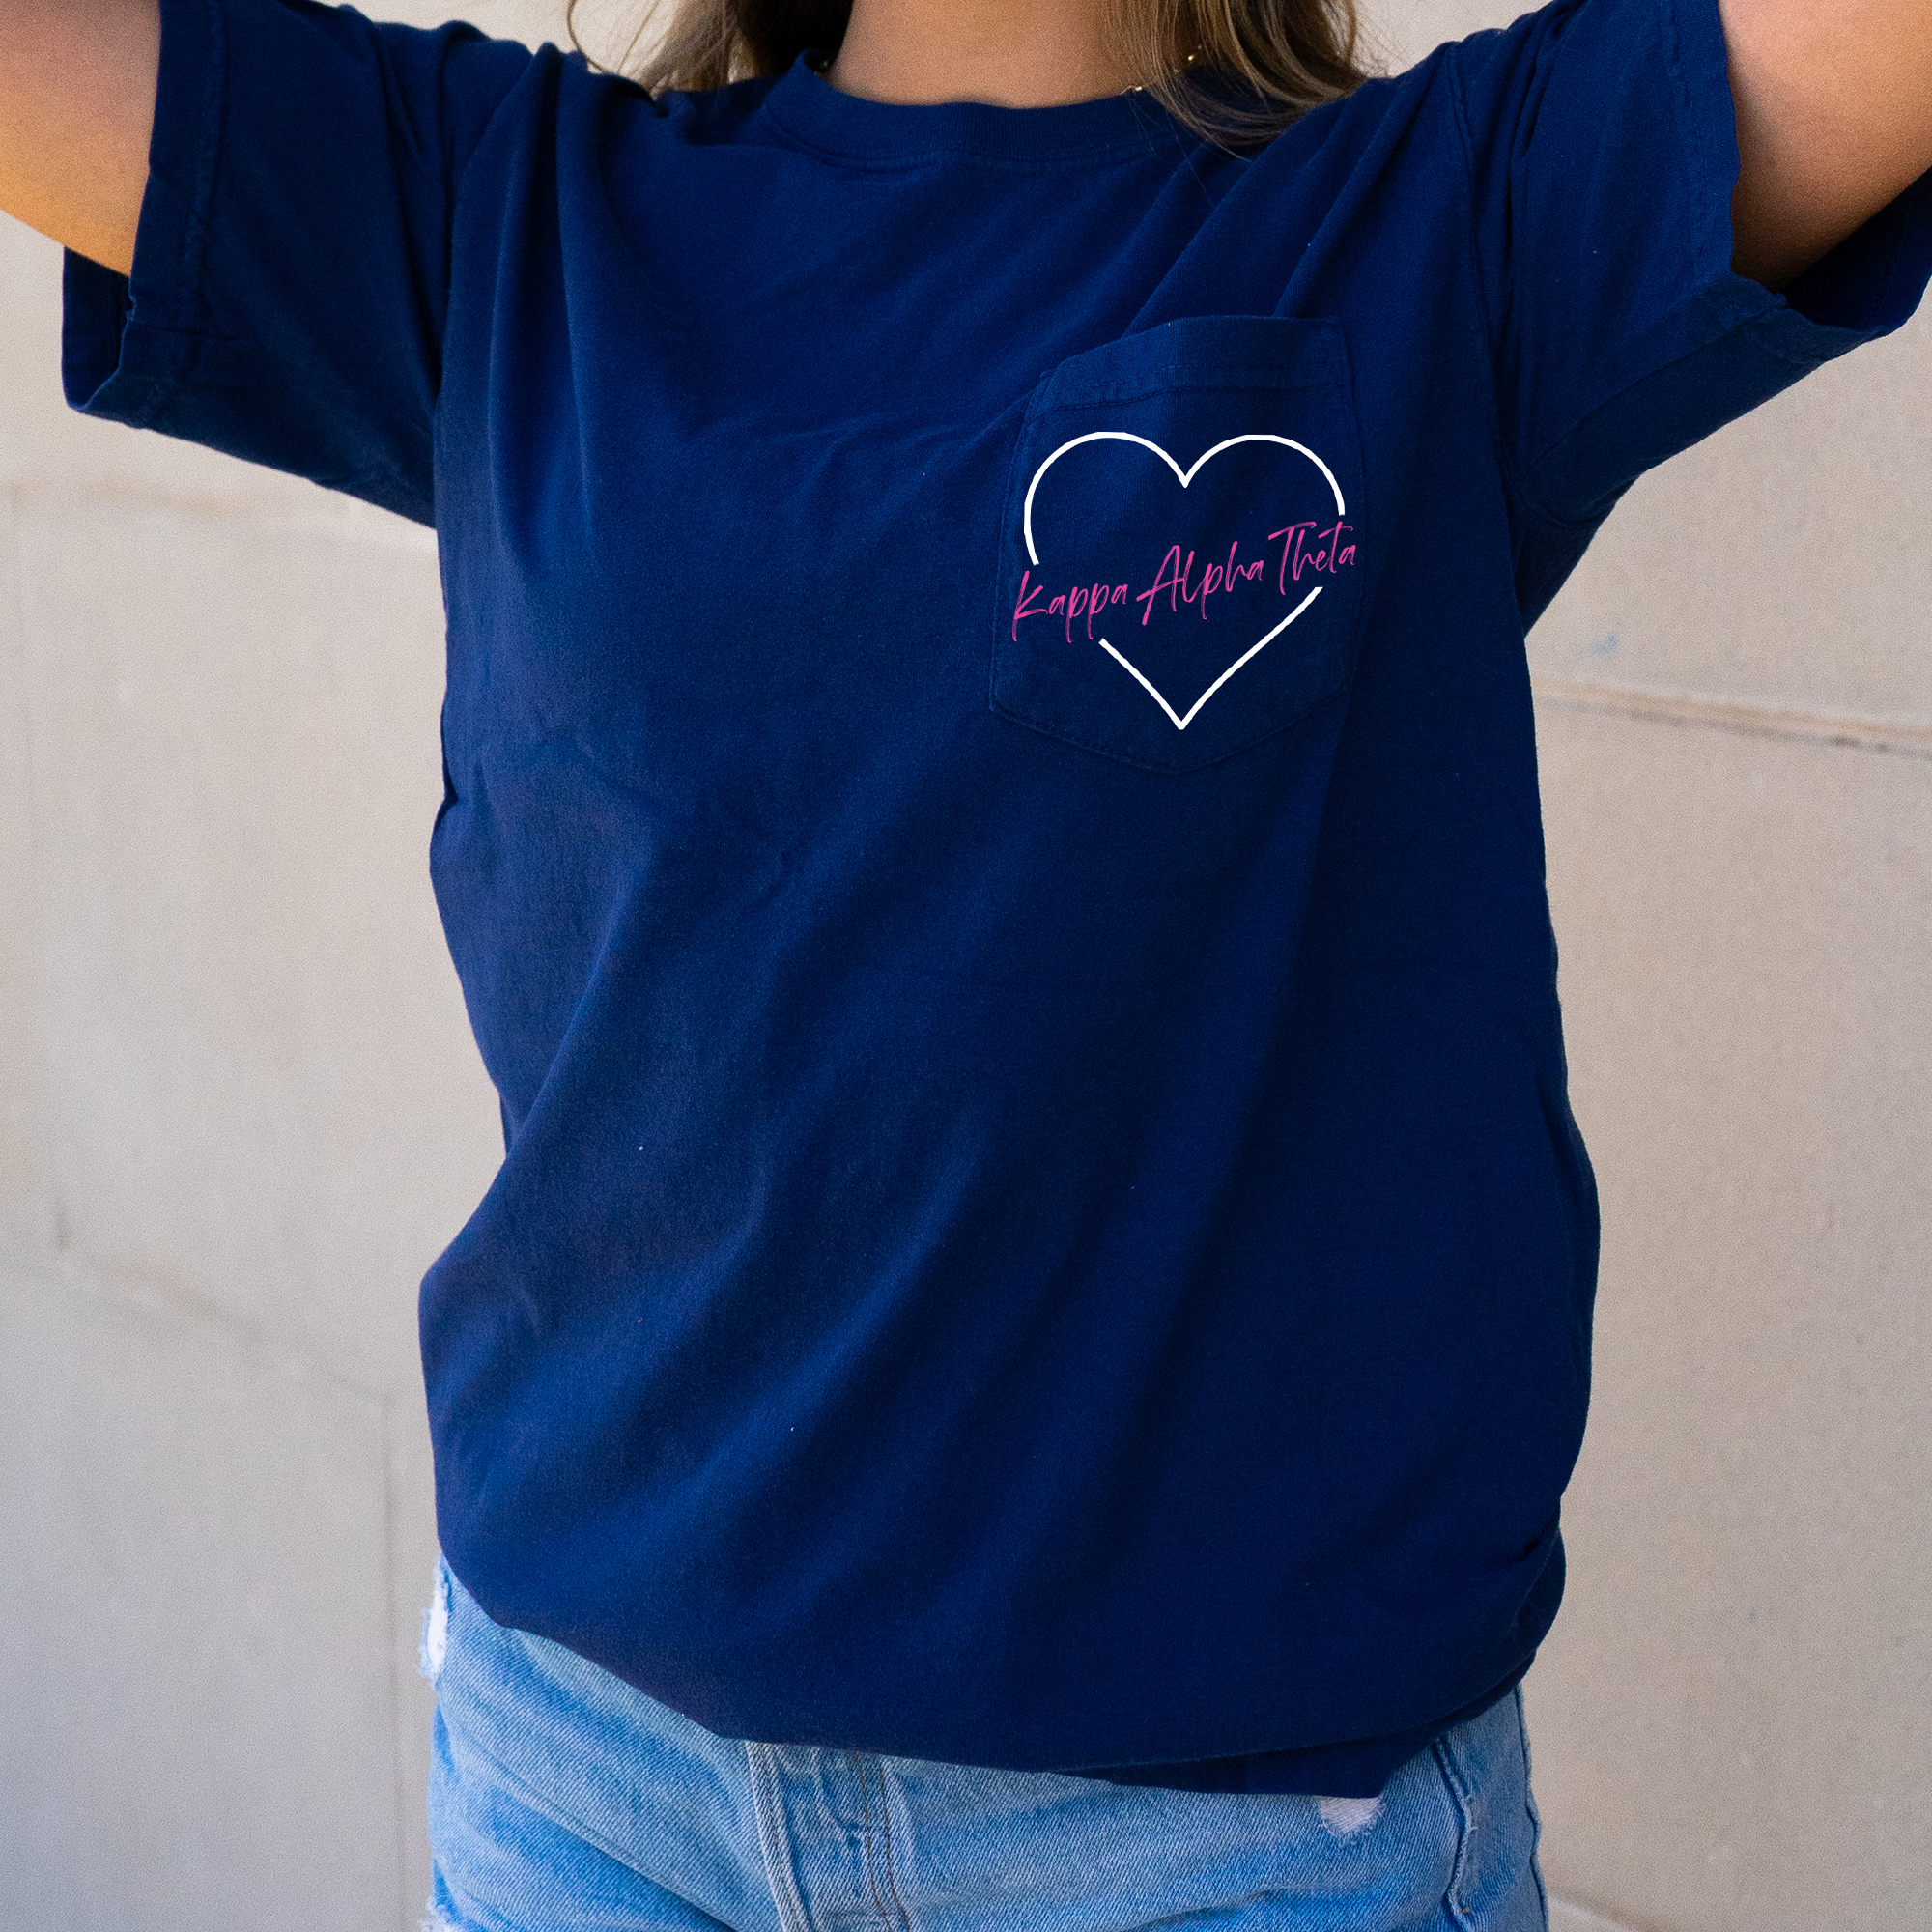 Kappa Alpha Theta Heart Pocket T-Shirt - Navy - Go Greek Chic